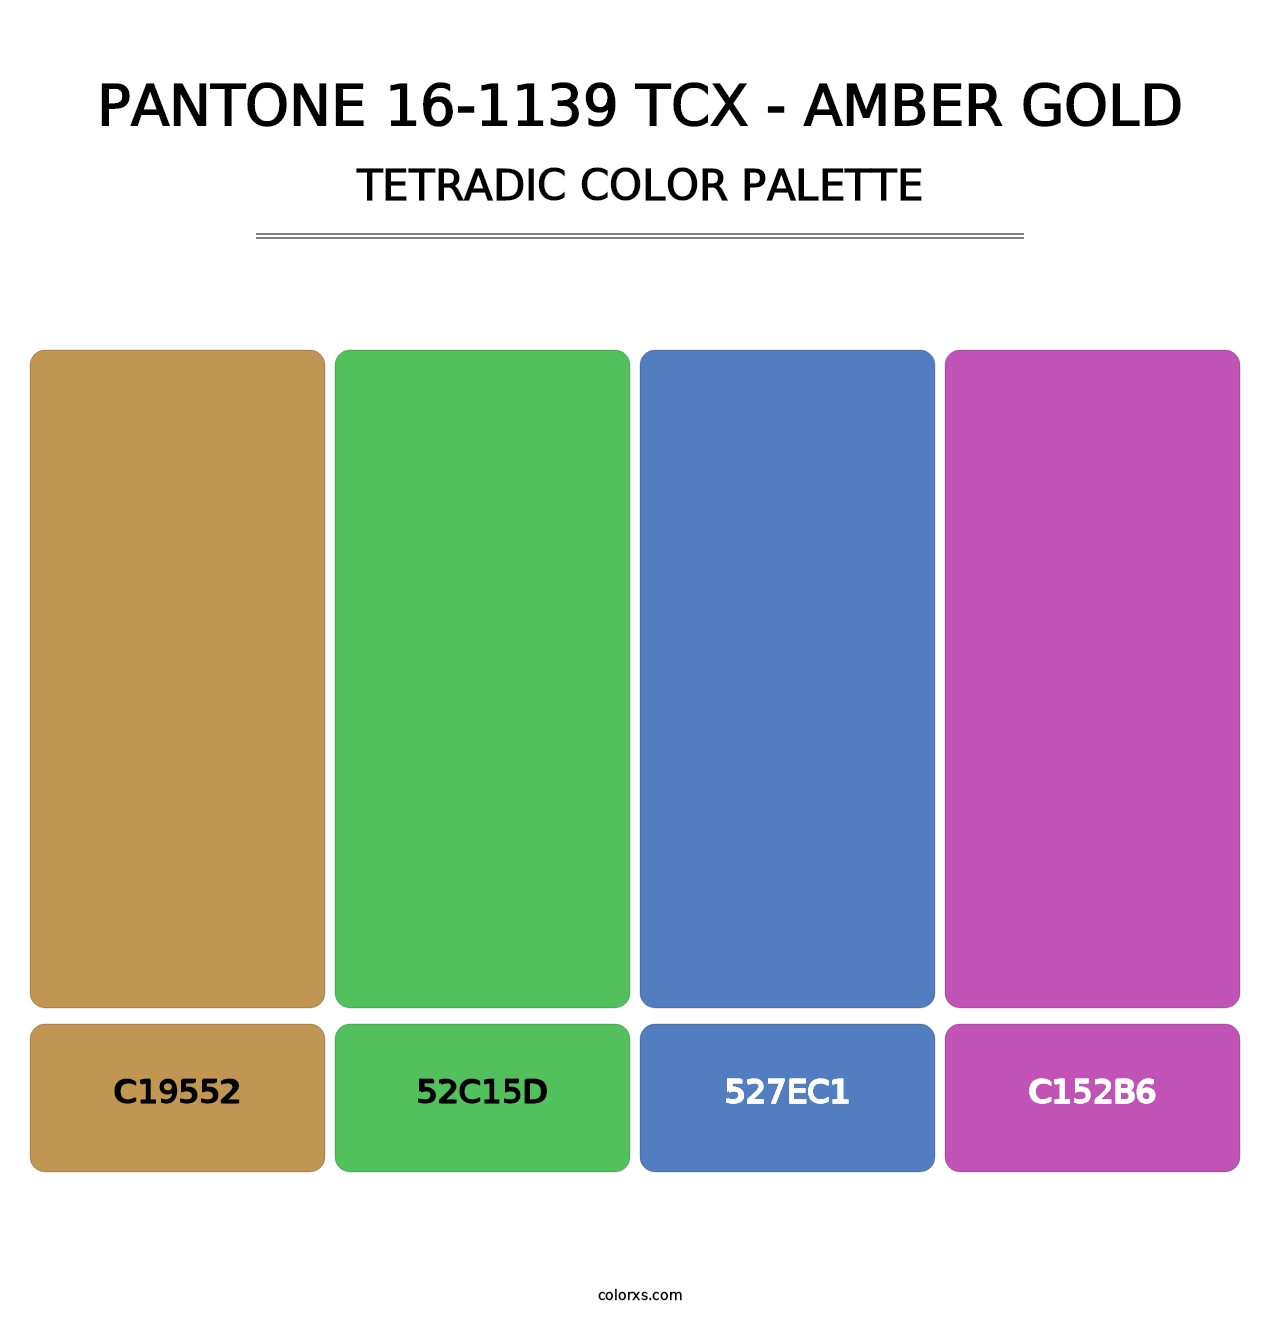 PANTONE 16-1139 TCX - Amber Gold - Tetradic Color Palette